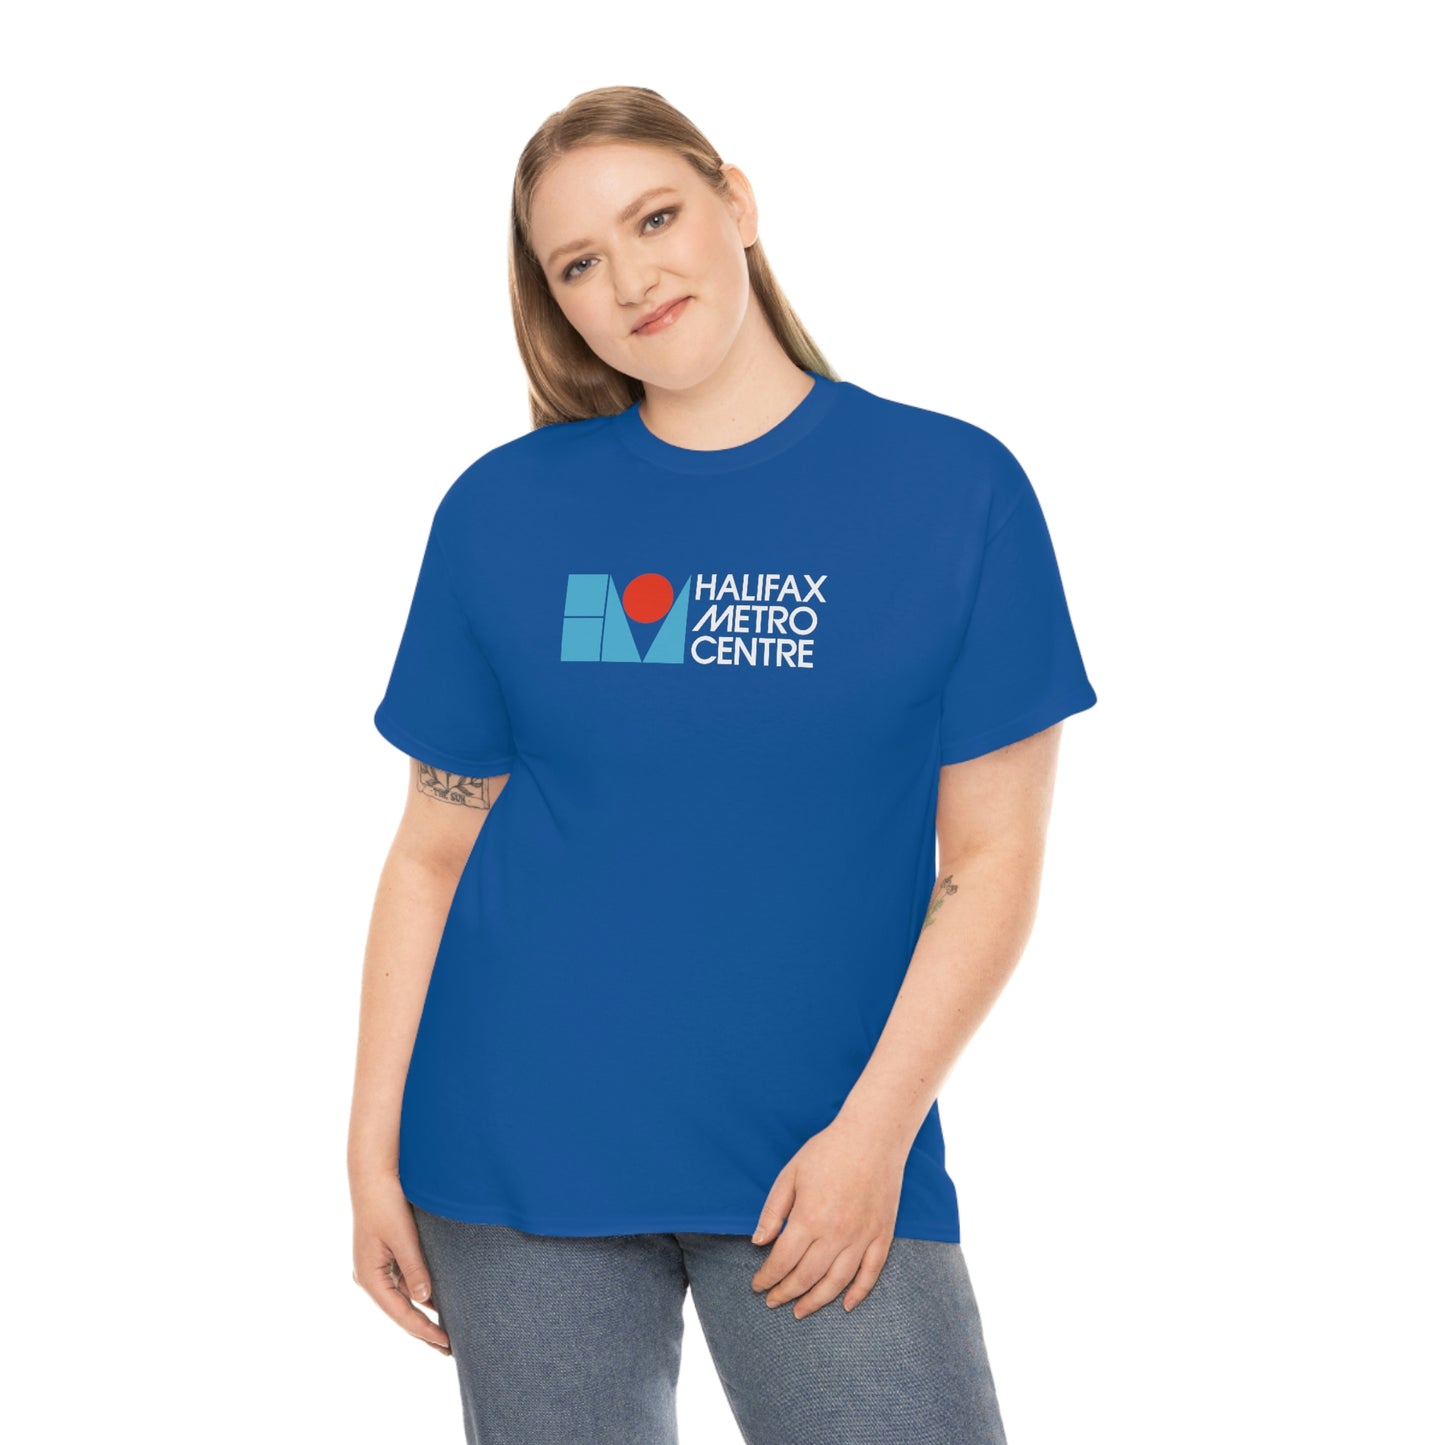 Halifax Metro Centre T-Shirt